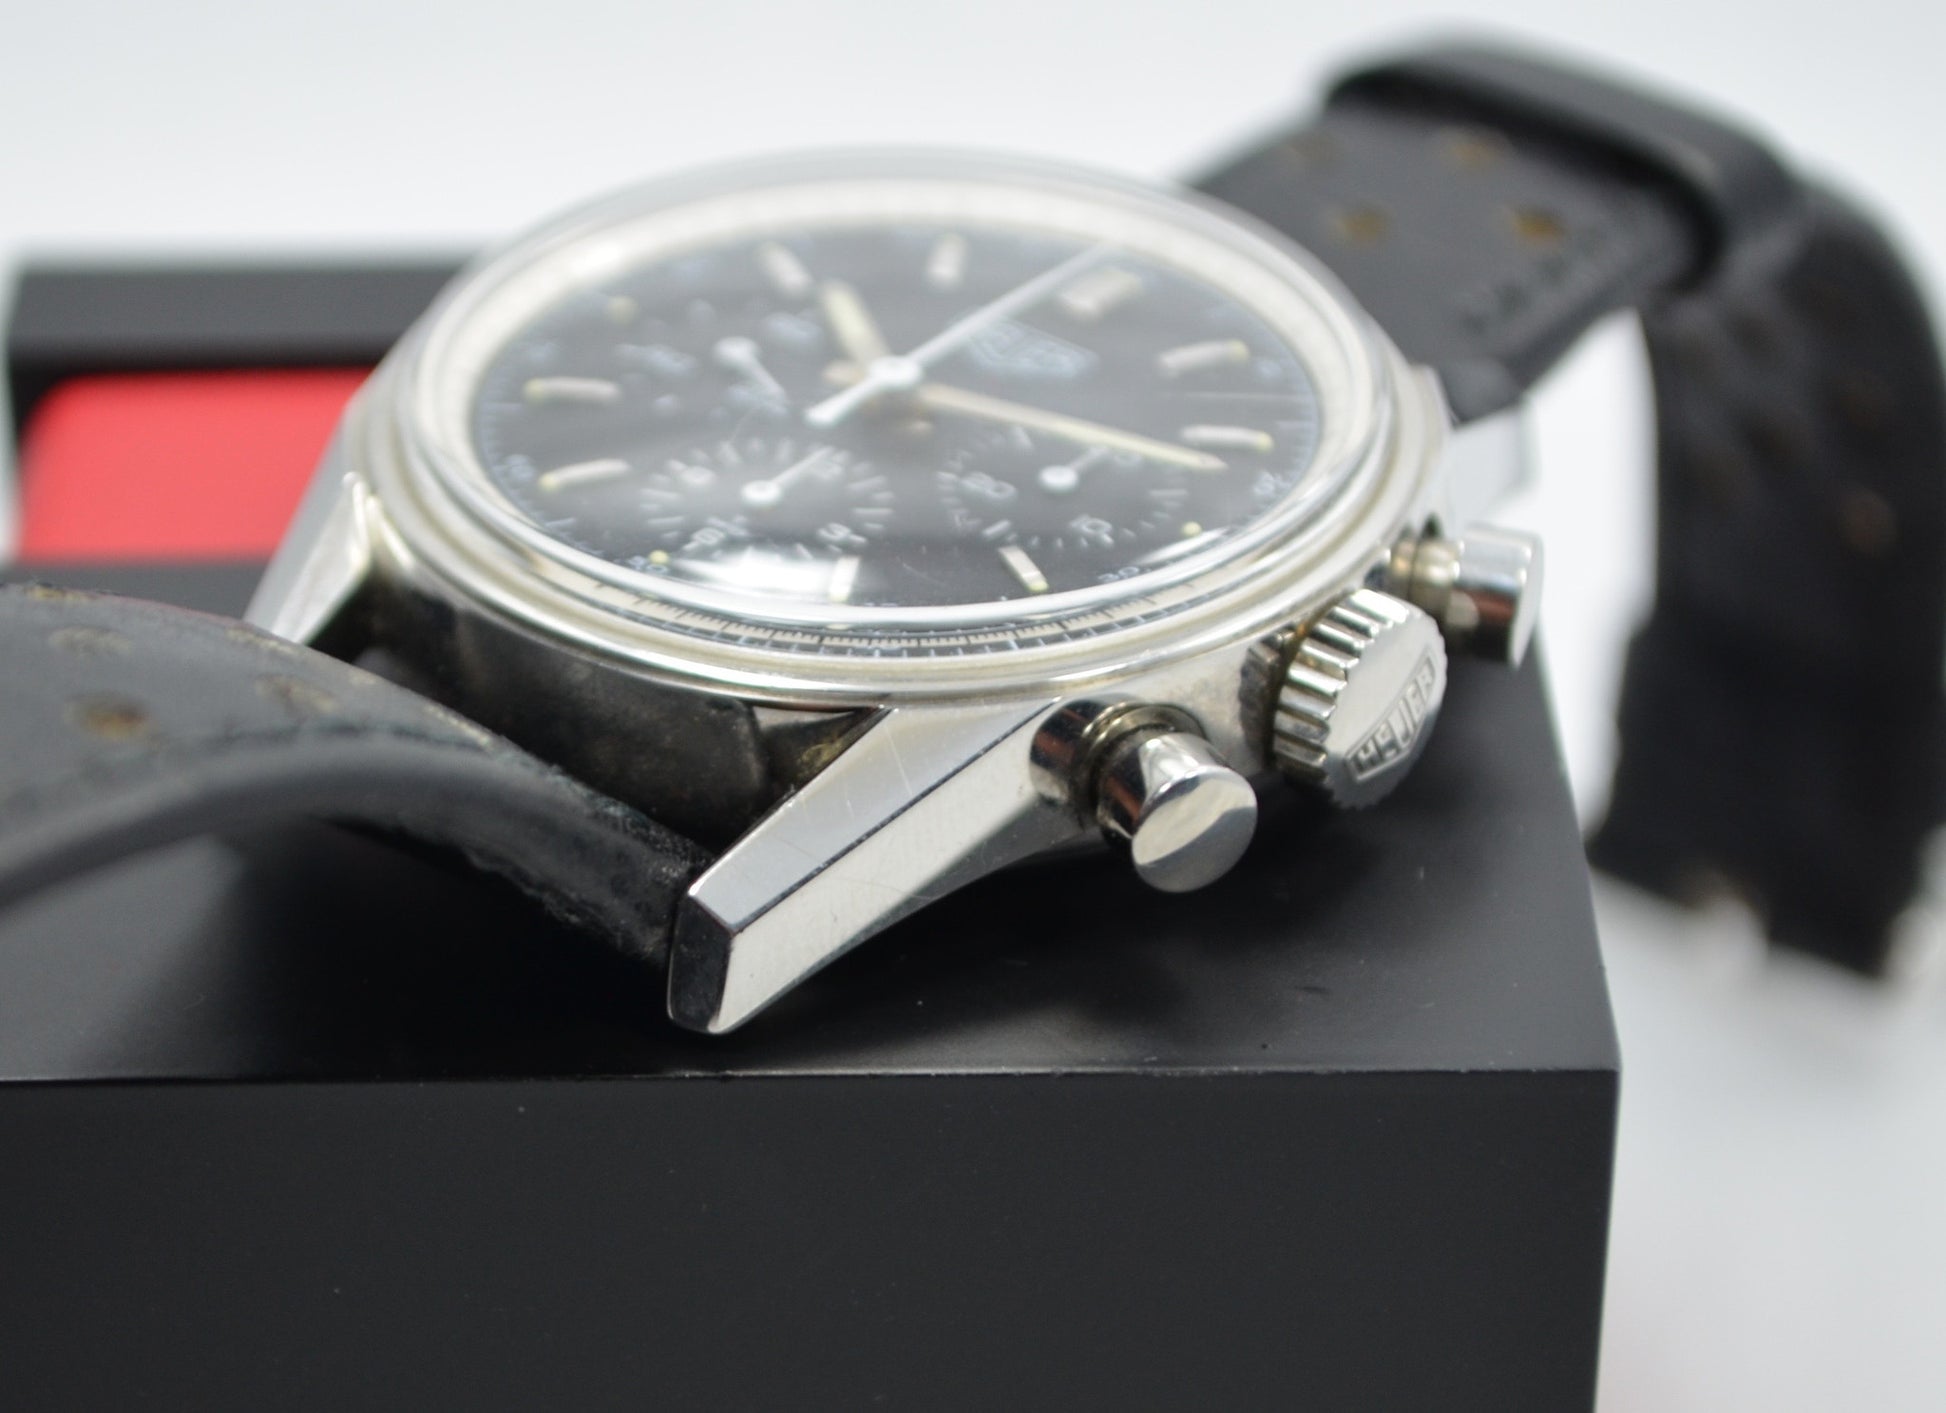 Tag Heuer CS31111 Heuer Carrera Steel Chronograph 1964 Re-Edition Wristwatch - Hashtag Watch Company